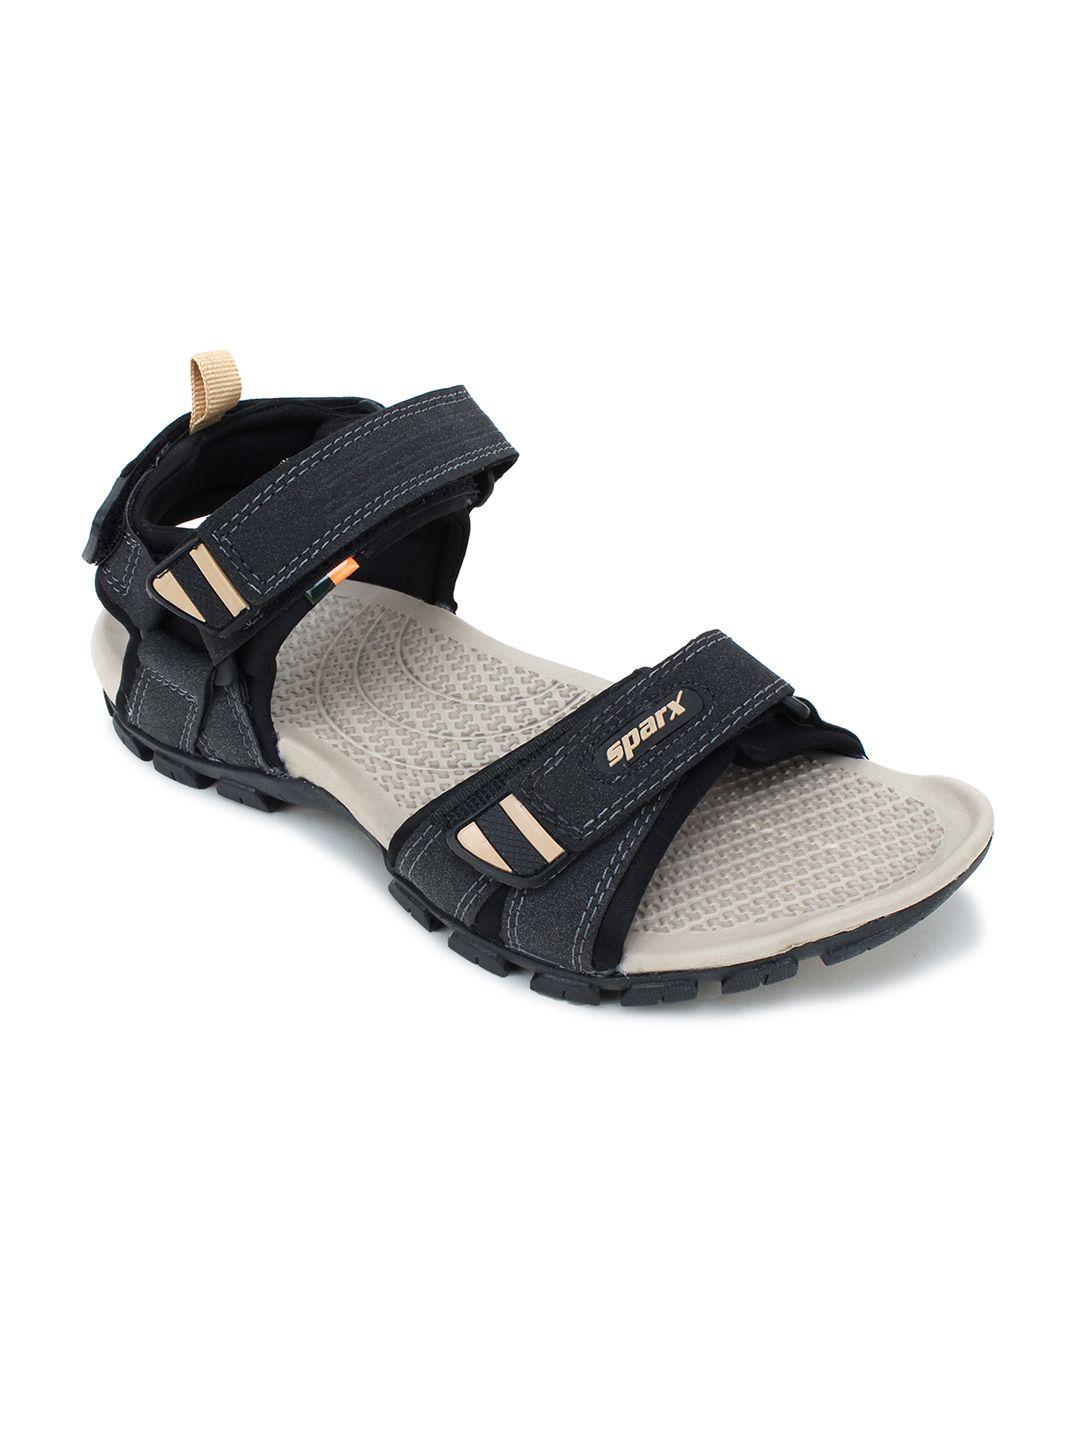 sparx-men-ss-481-black-and-beige-sports--sandals